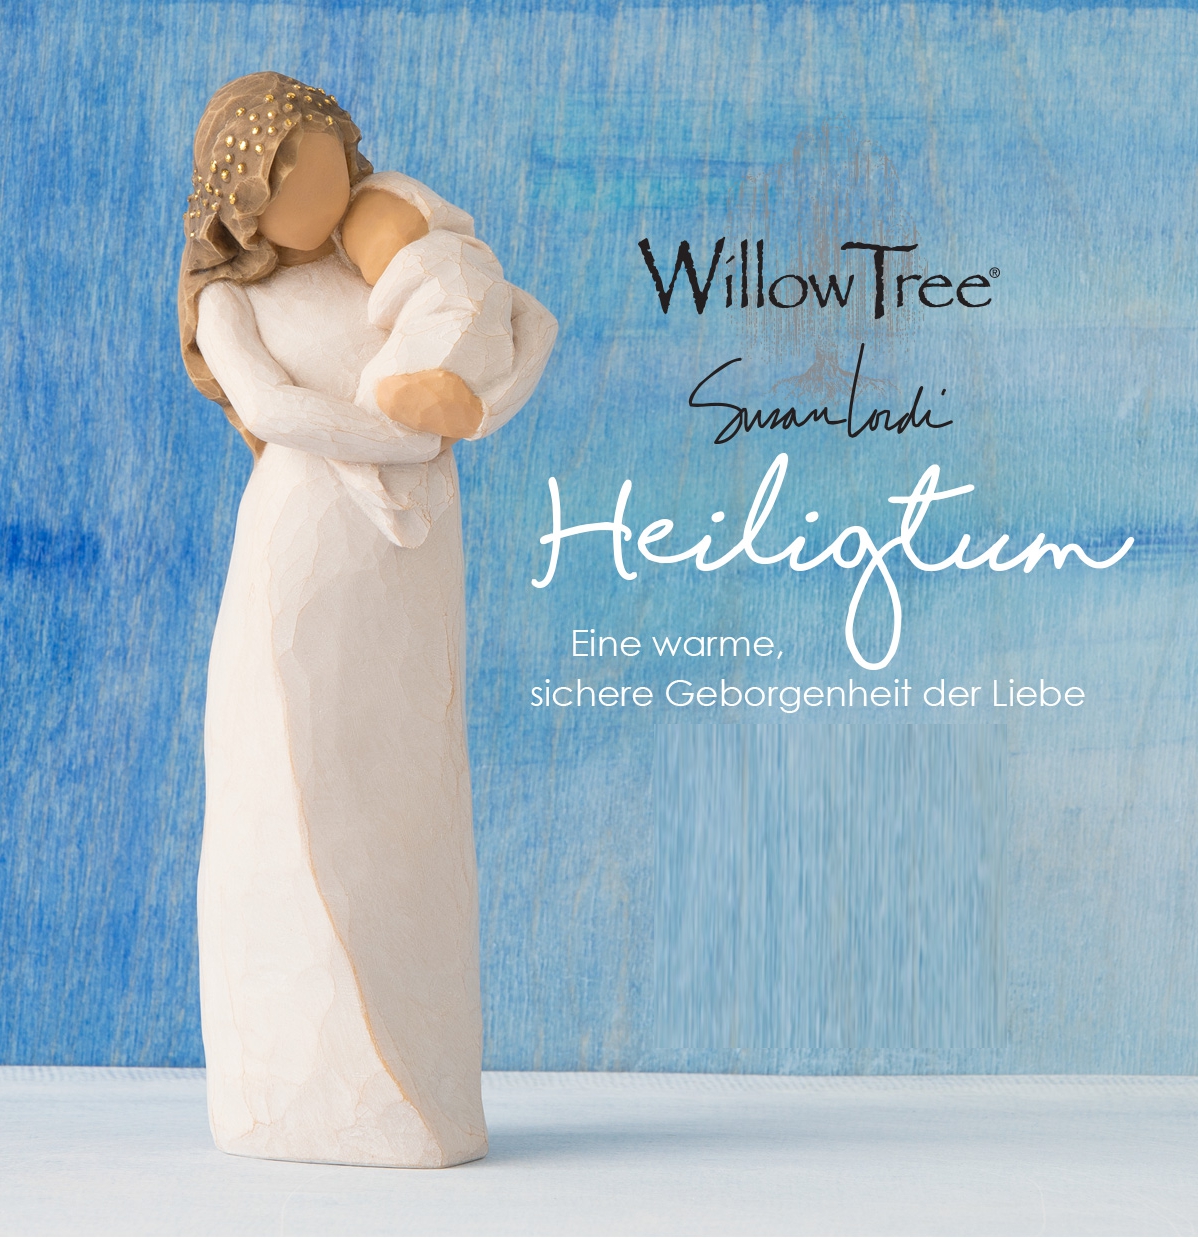 27799-Willow-Tree-Sanctuary-Heiligtum-1